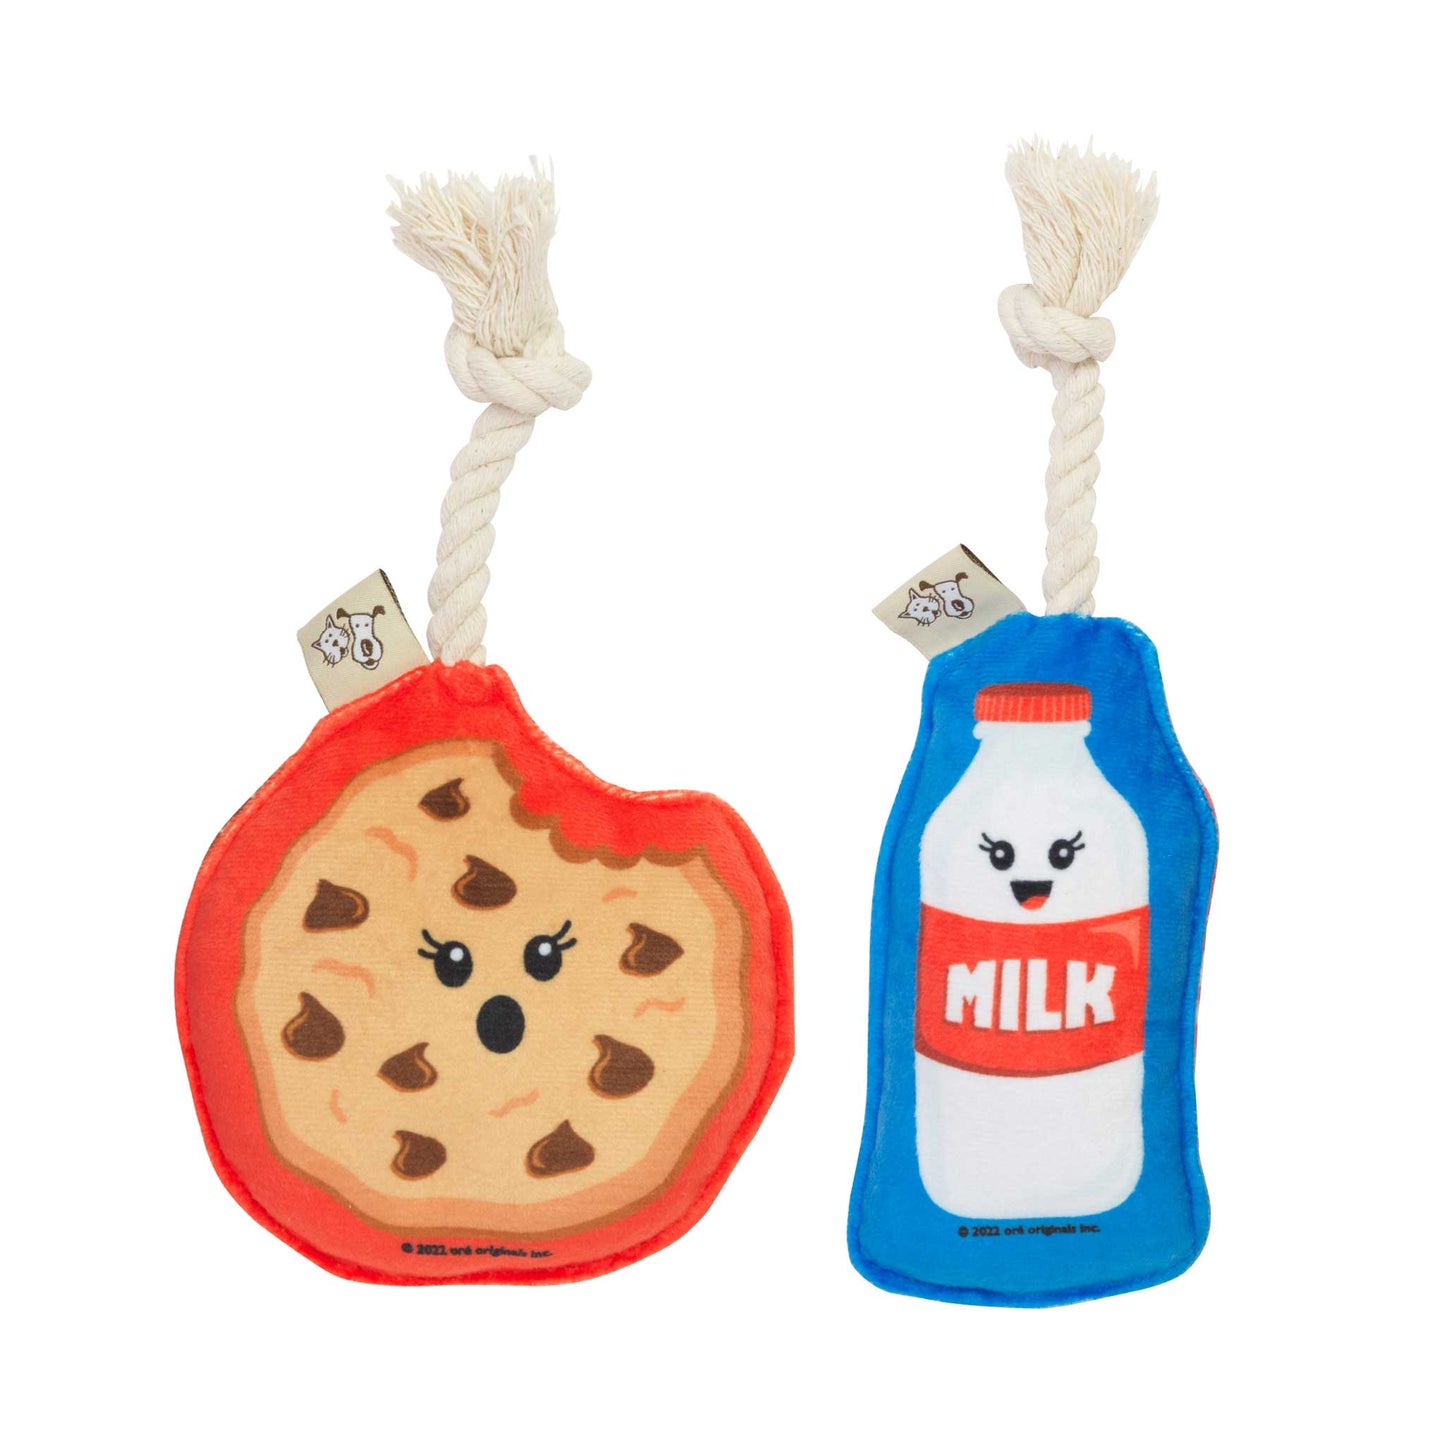 Mini Dog Toy Set - Cookie & Milk